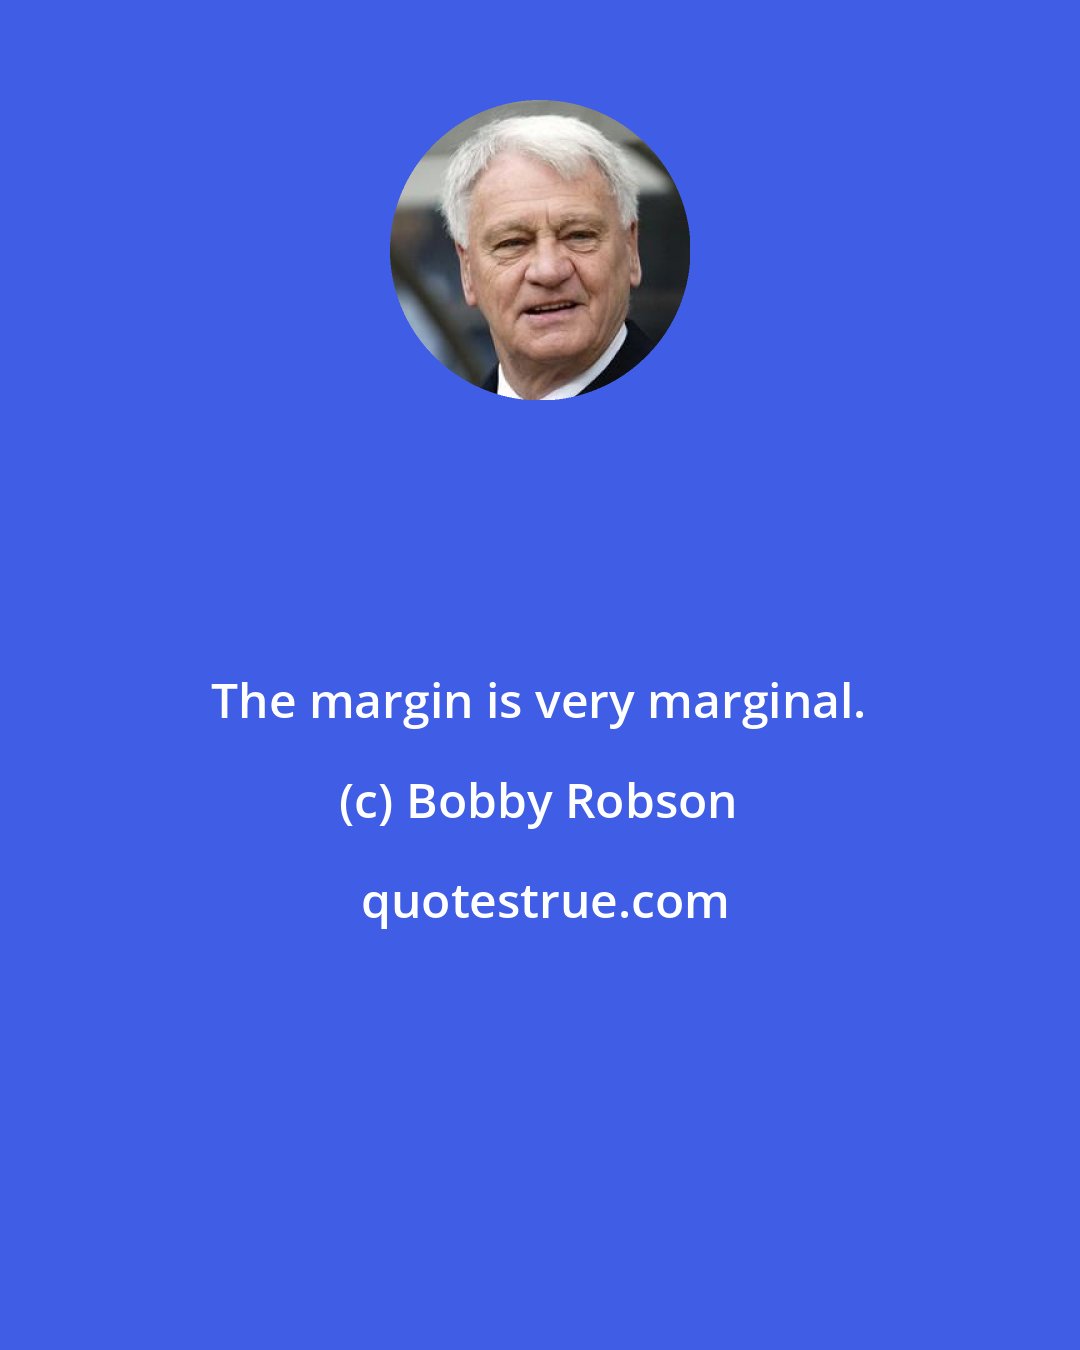 Bobby Robson: The margin is very marginal.